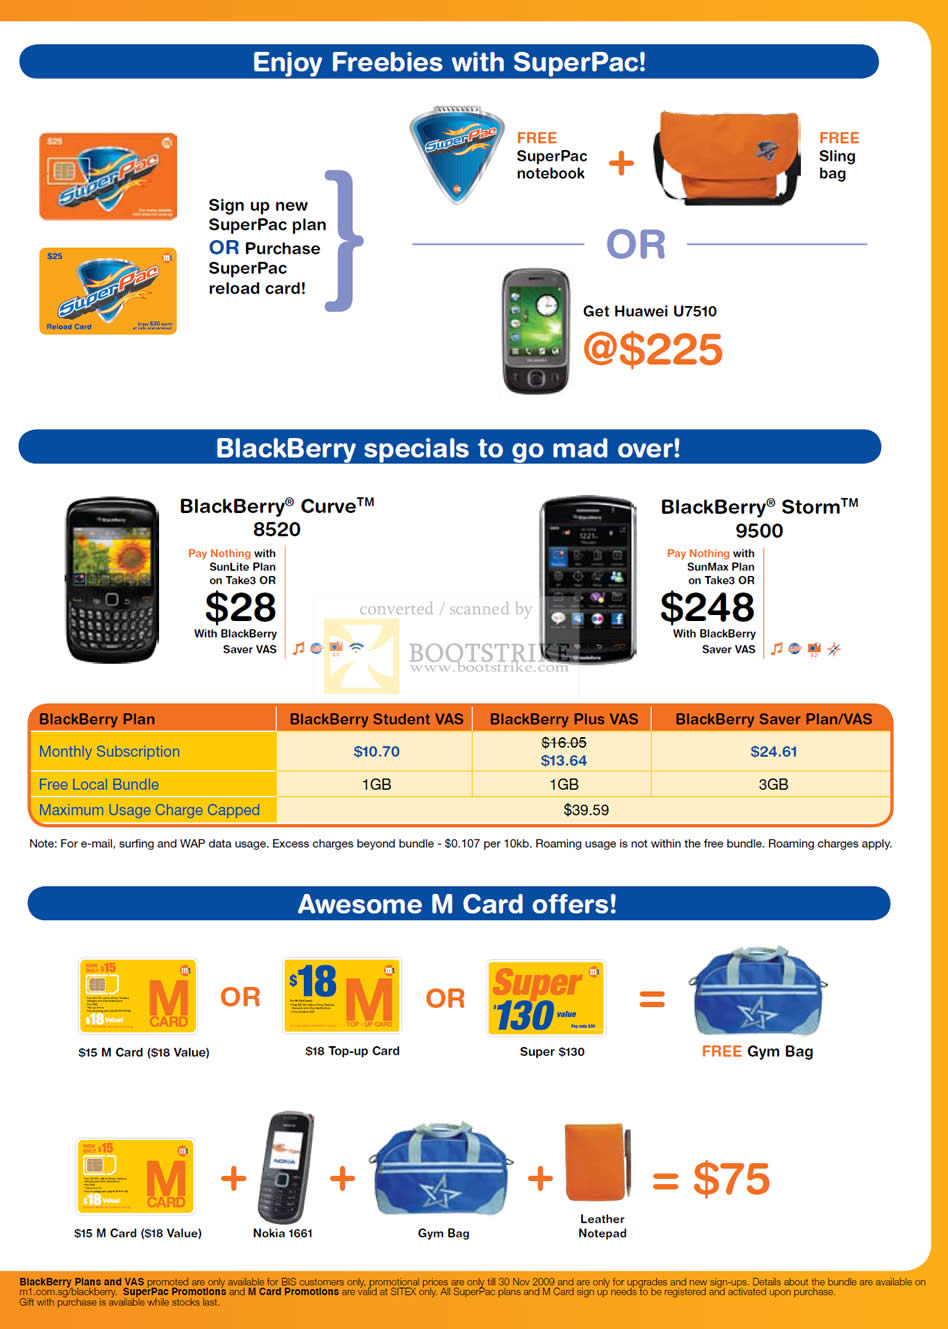 Sitex 2009 price list image brochure of M1 SuperPac Blackberry Curve 8520 Storm 9500 M Card